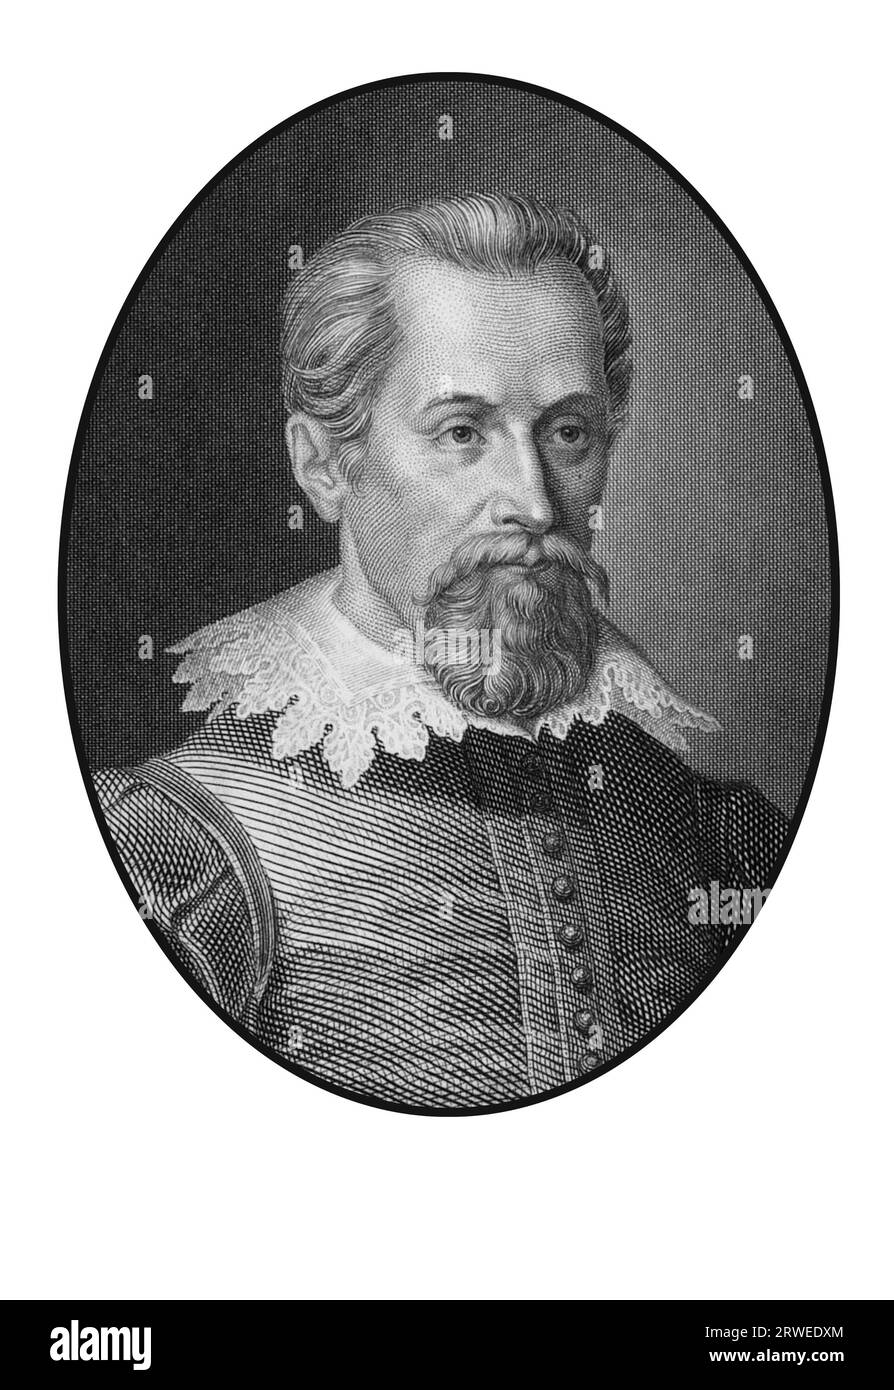 Johannes Kepler - Famous Astronomer, Vintage engraved illustration portrait Stock Photo